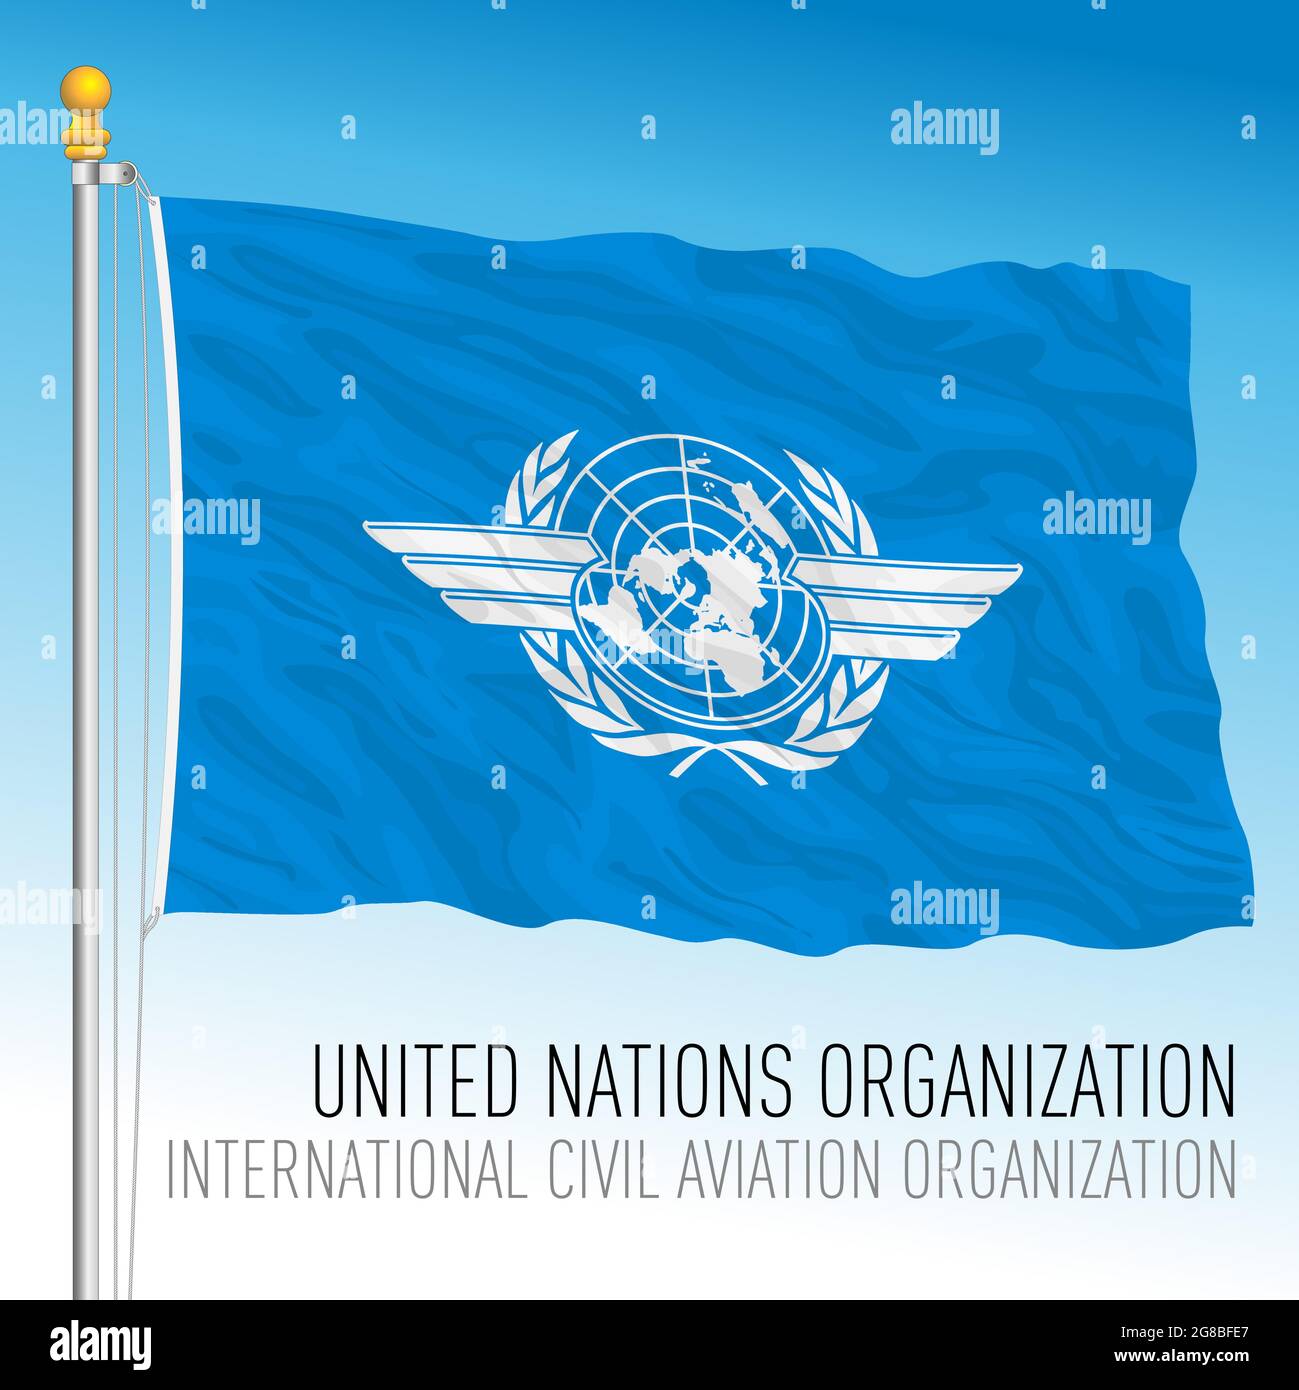 United Nations, ICAO official flag, International Ciliv Aviation Organization, vector illustration Stock Vector